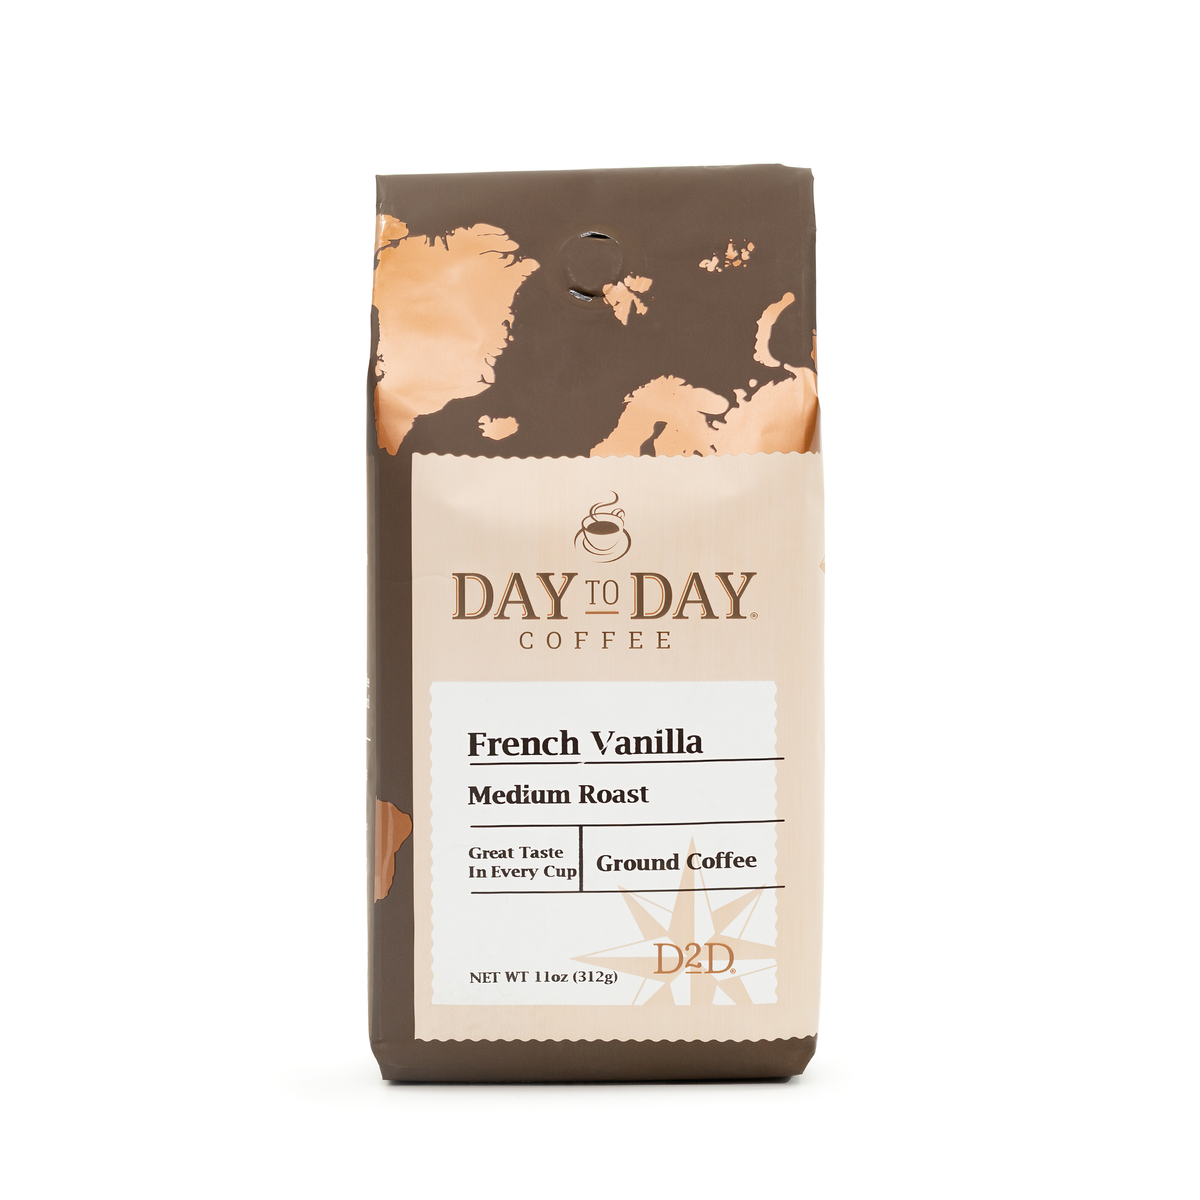 Day to day coffee 11oz french vanilla dark roast ground coffee -1 